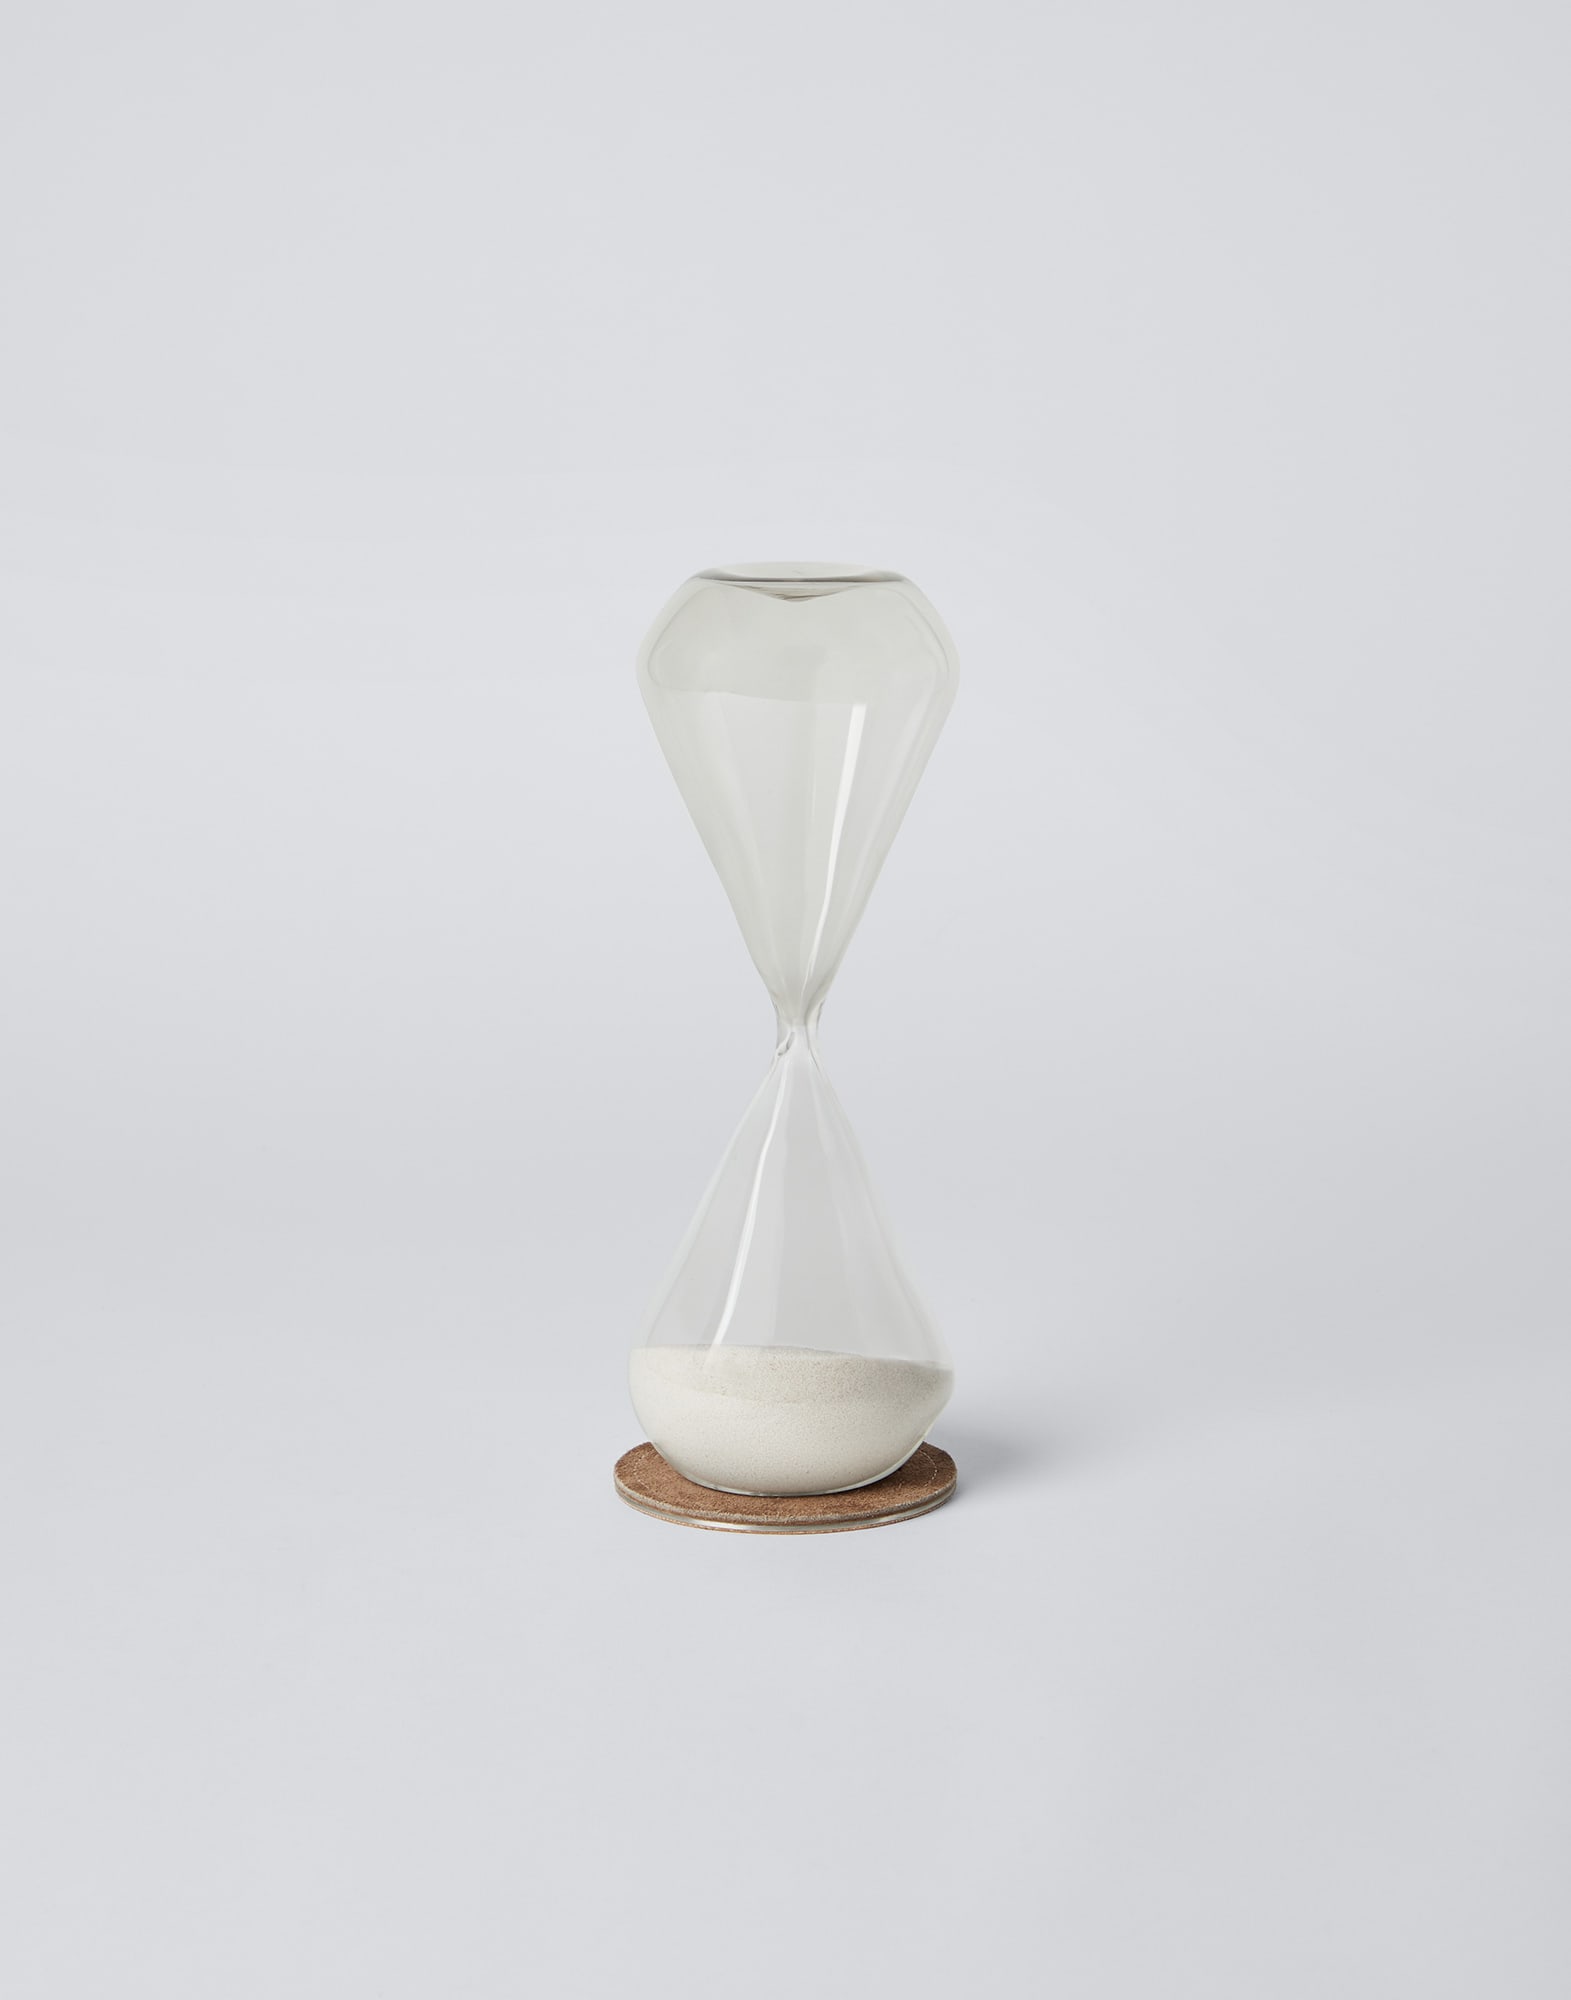 Geometric hourglass